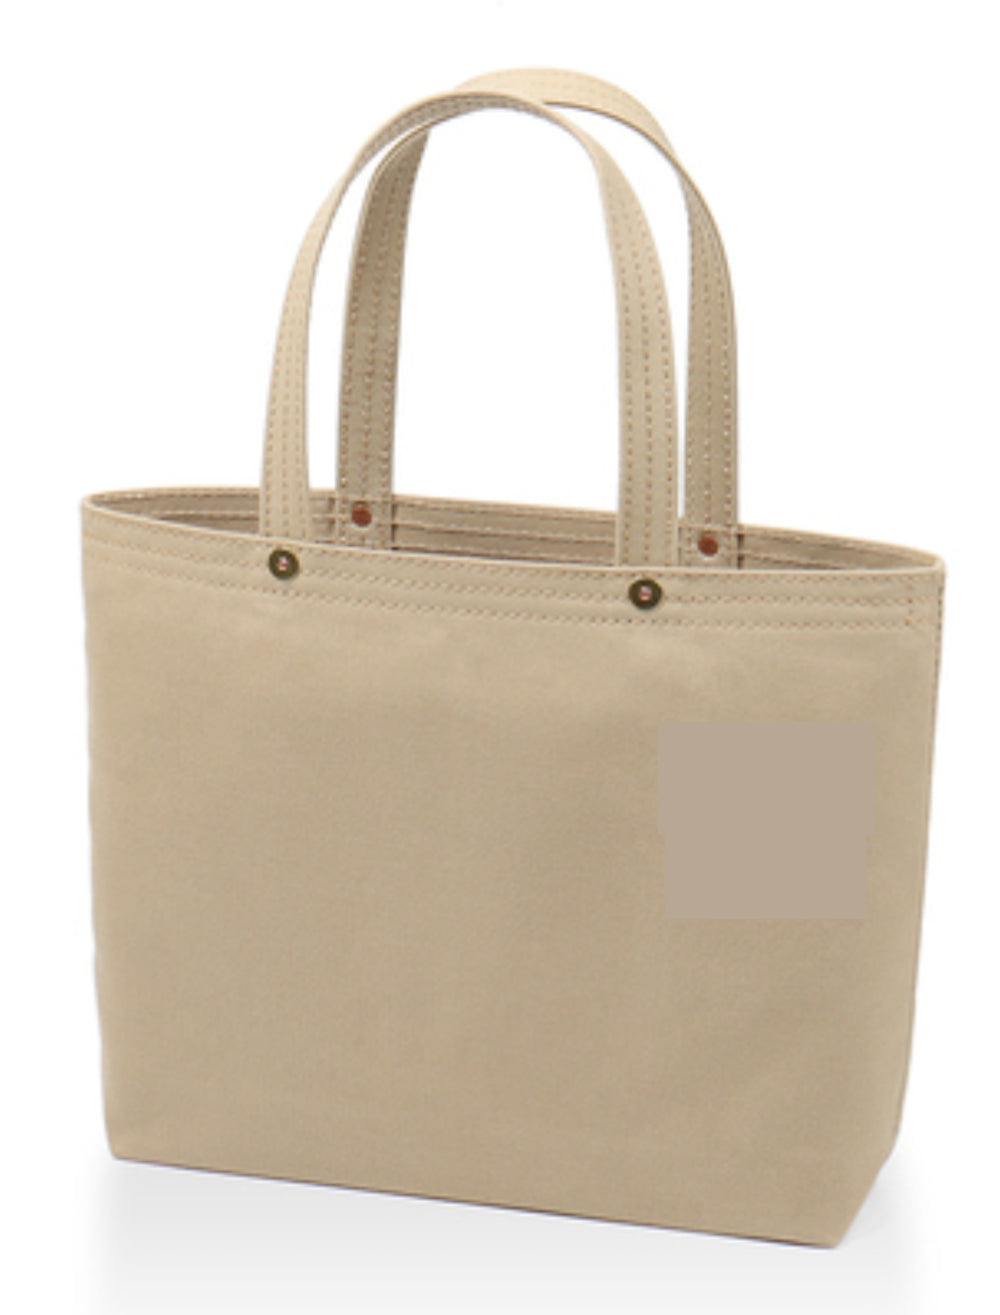 DJI Multi Use Shopping Bag- Canvas Beige